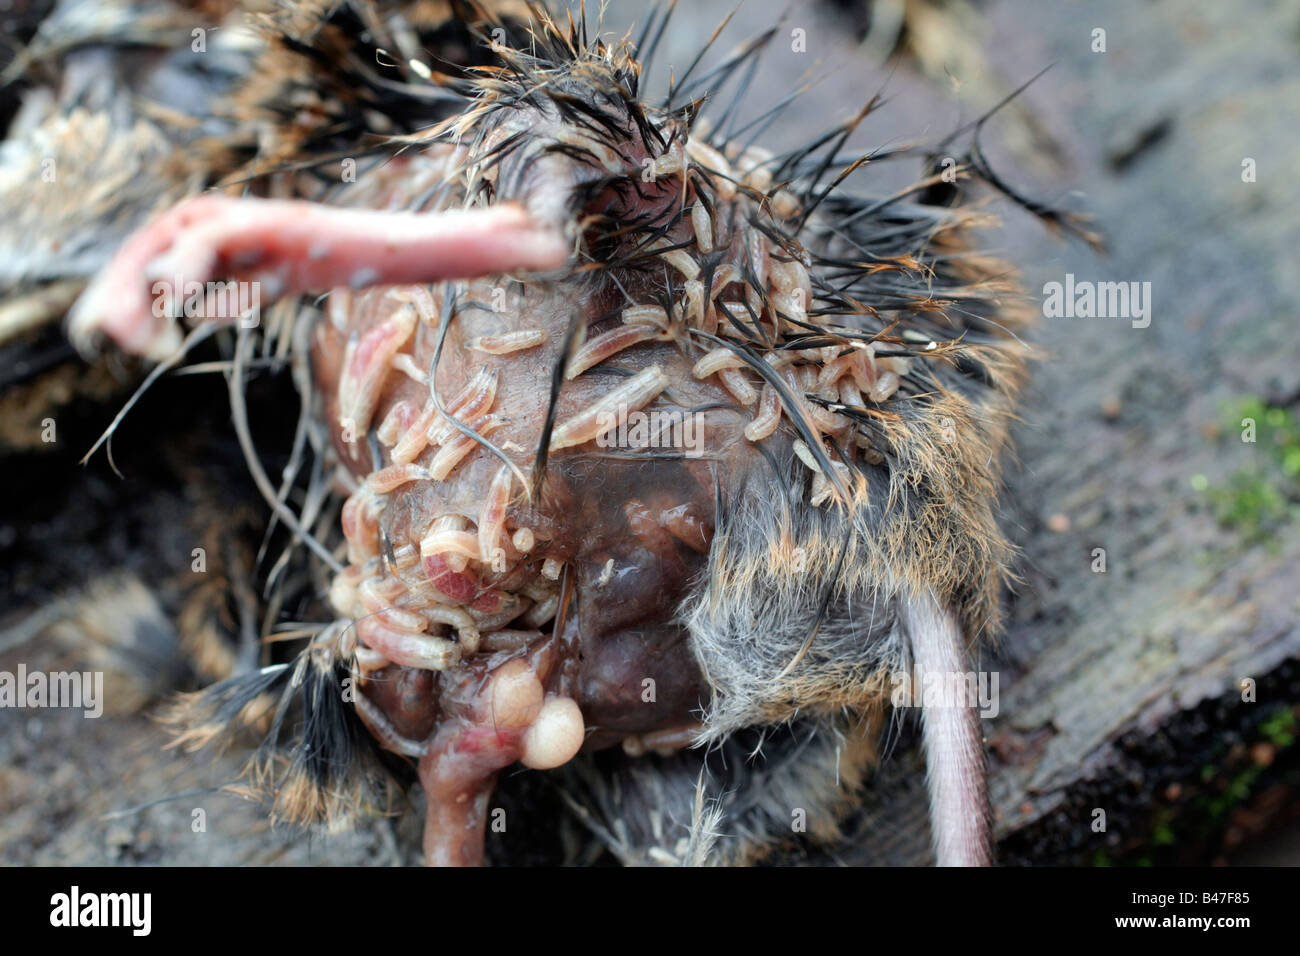 Un cadáver de ratón de campo siendo consumidos por las larvas de moscas Foto de stock